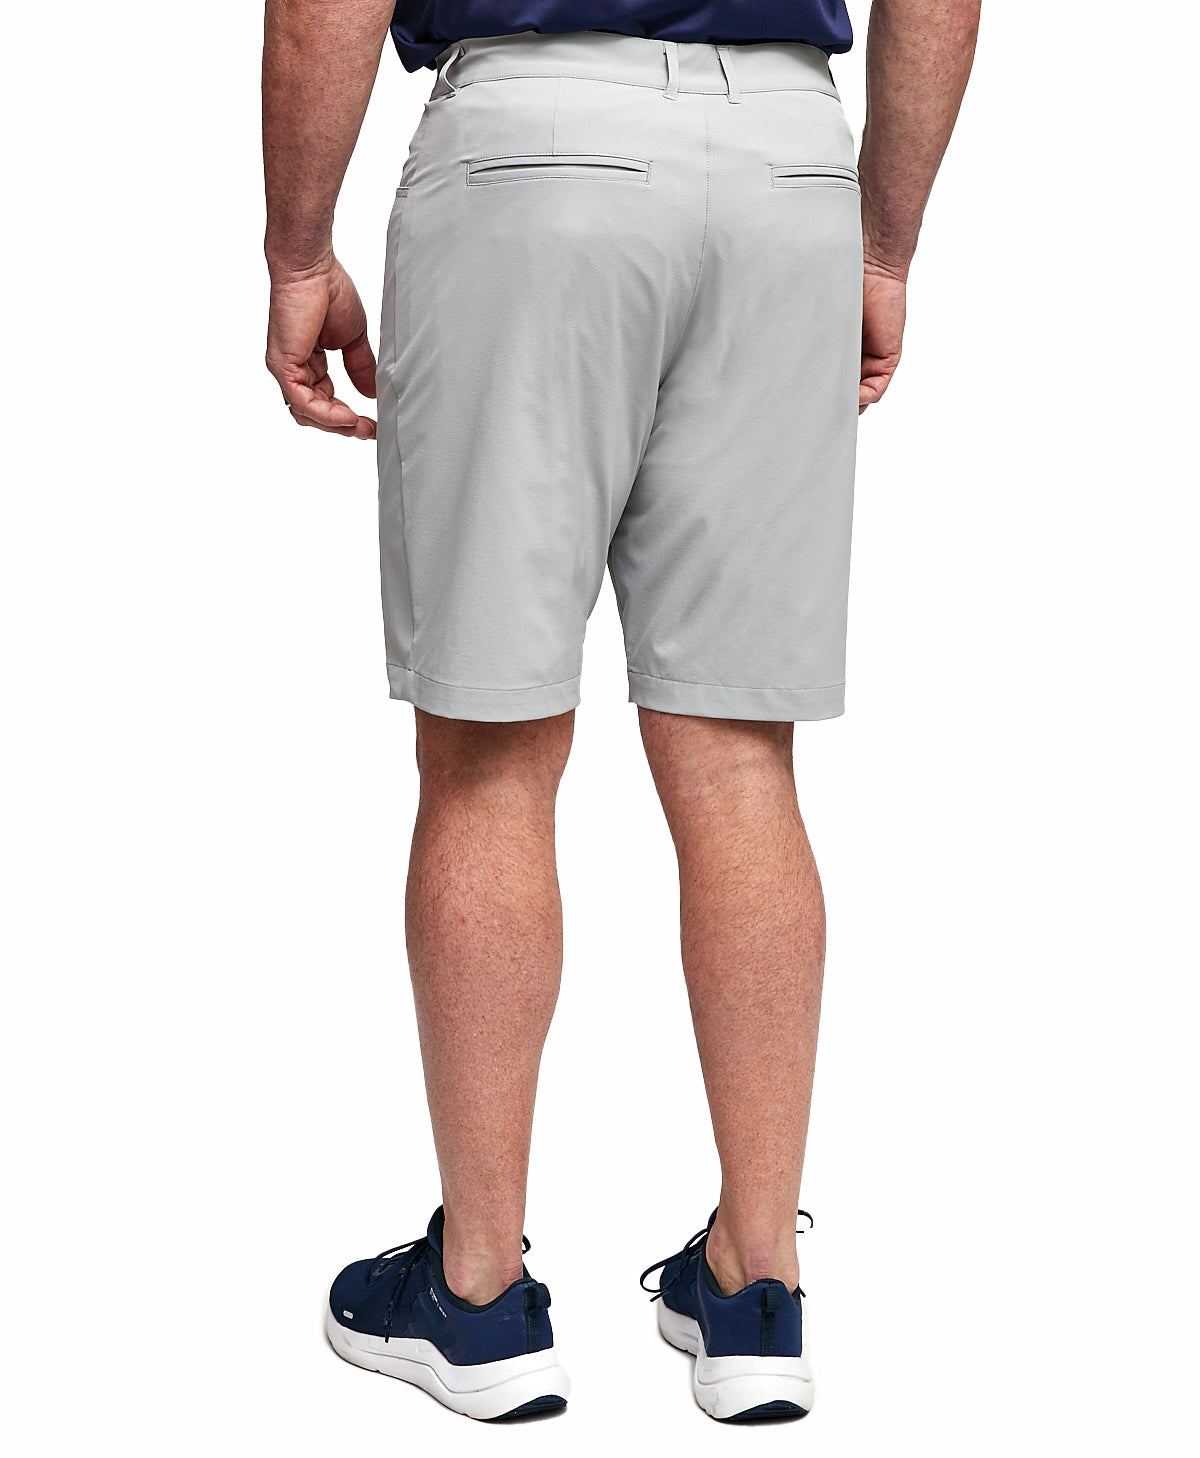 Men's Nike Golf Shorts